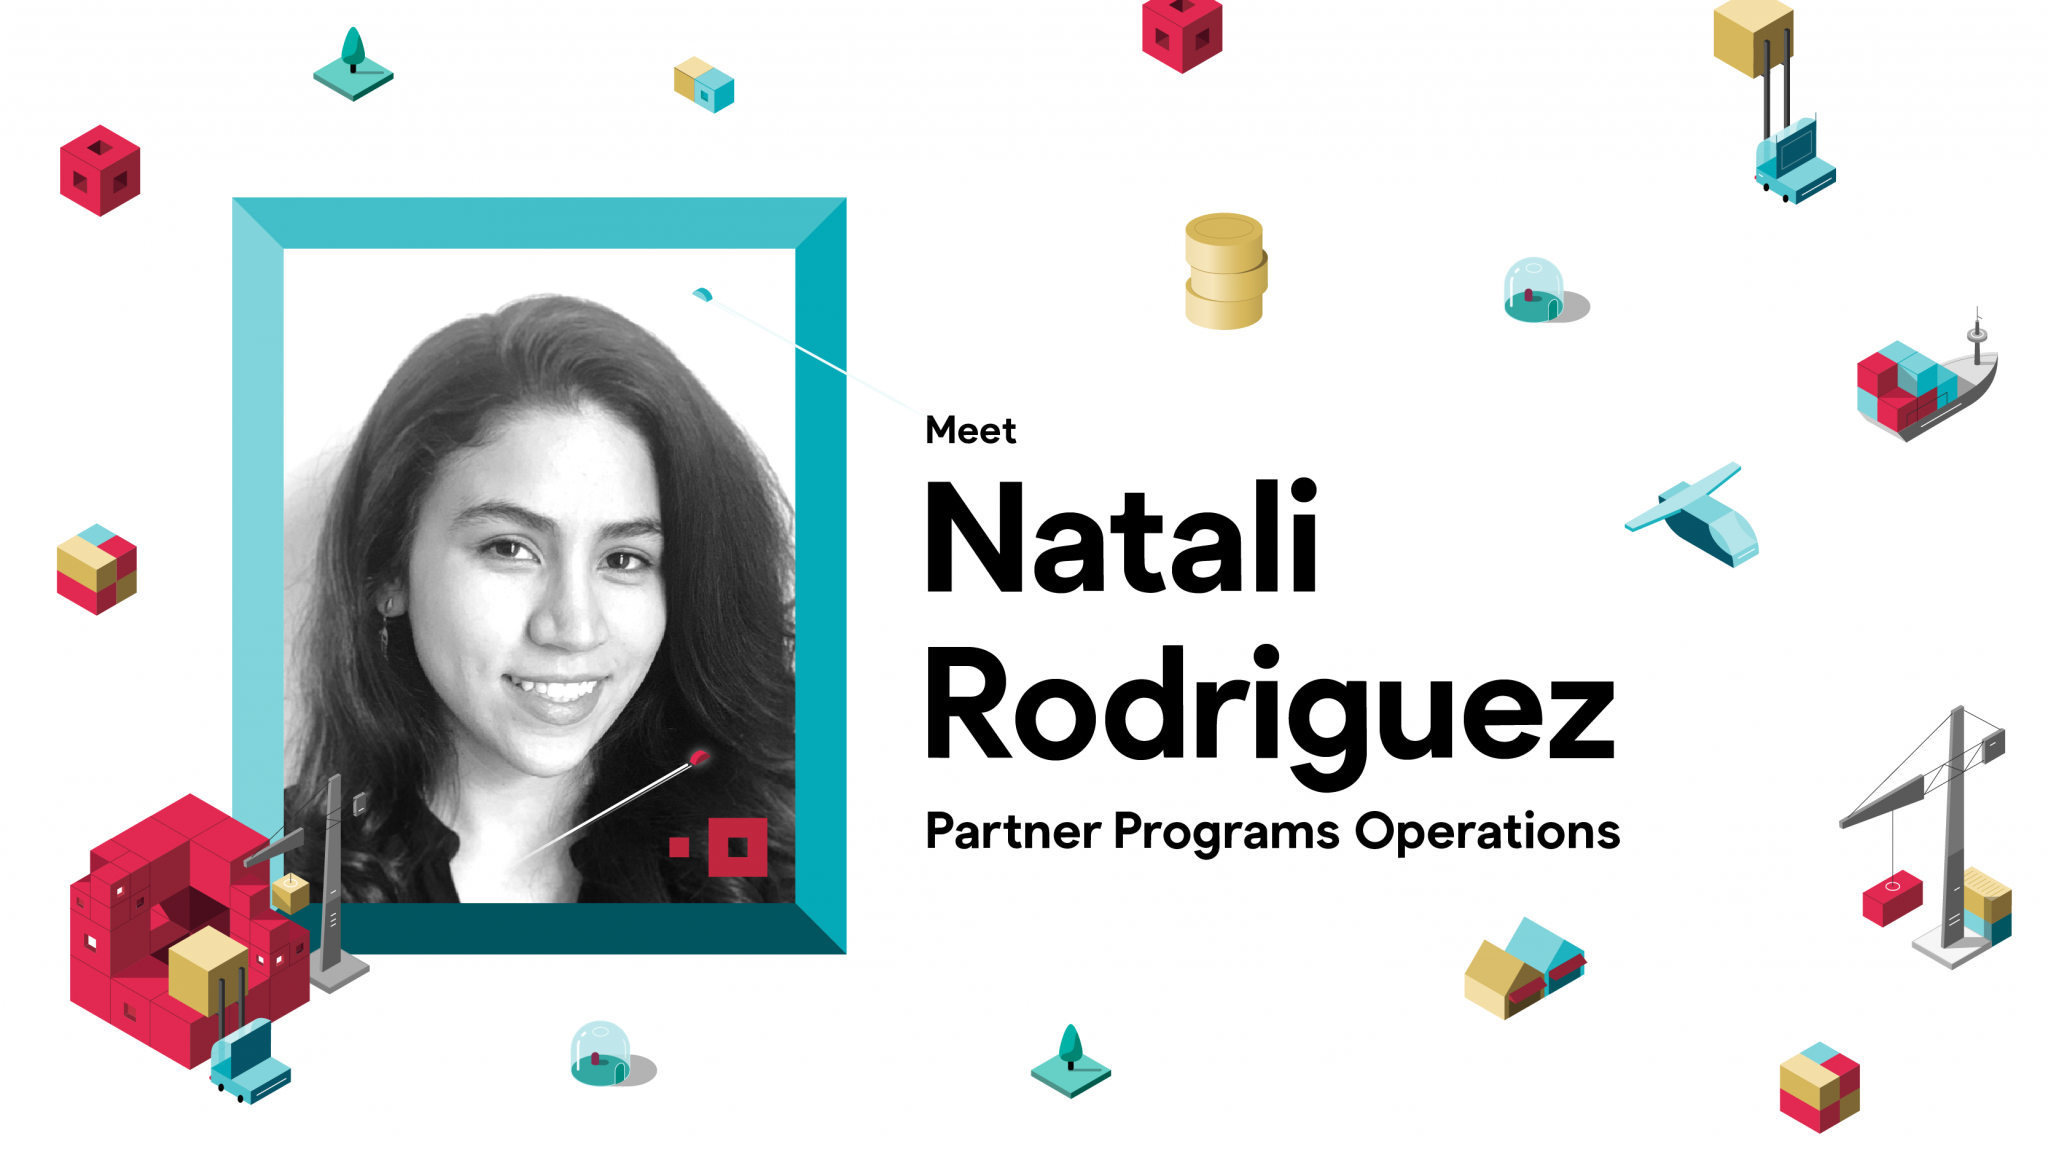 Meet Natali Rodriguez, BD Partner Programs Operations at Agoric